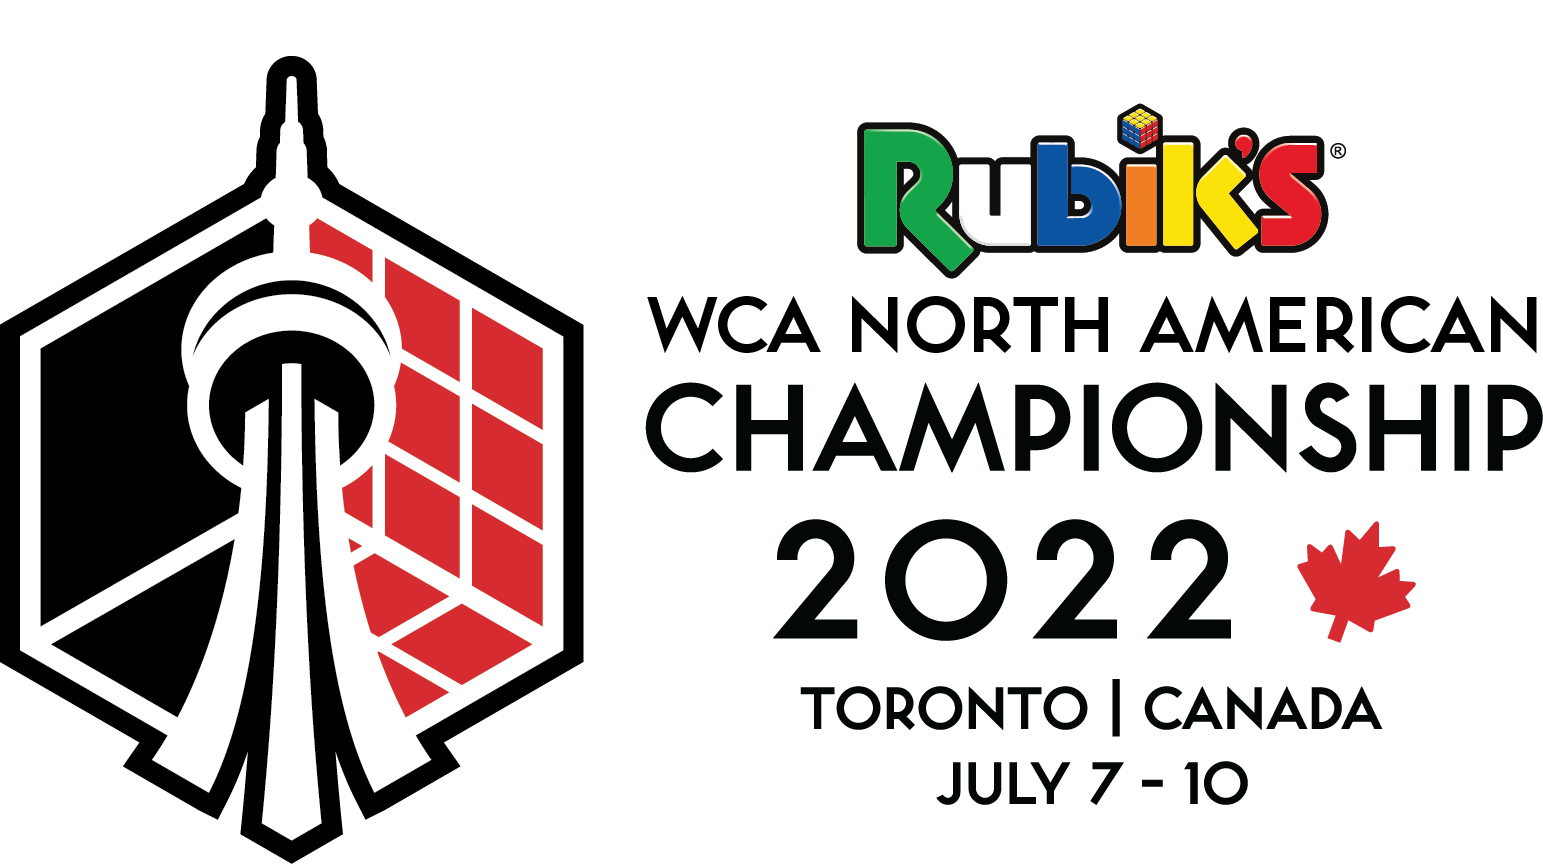 Rubik's WCA North American Championship